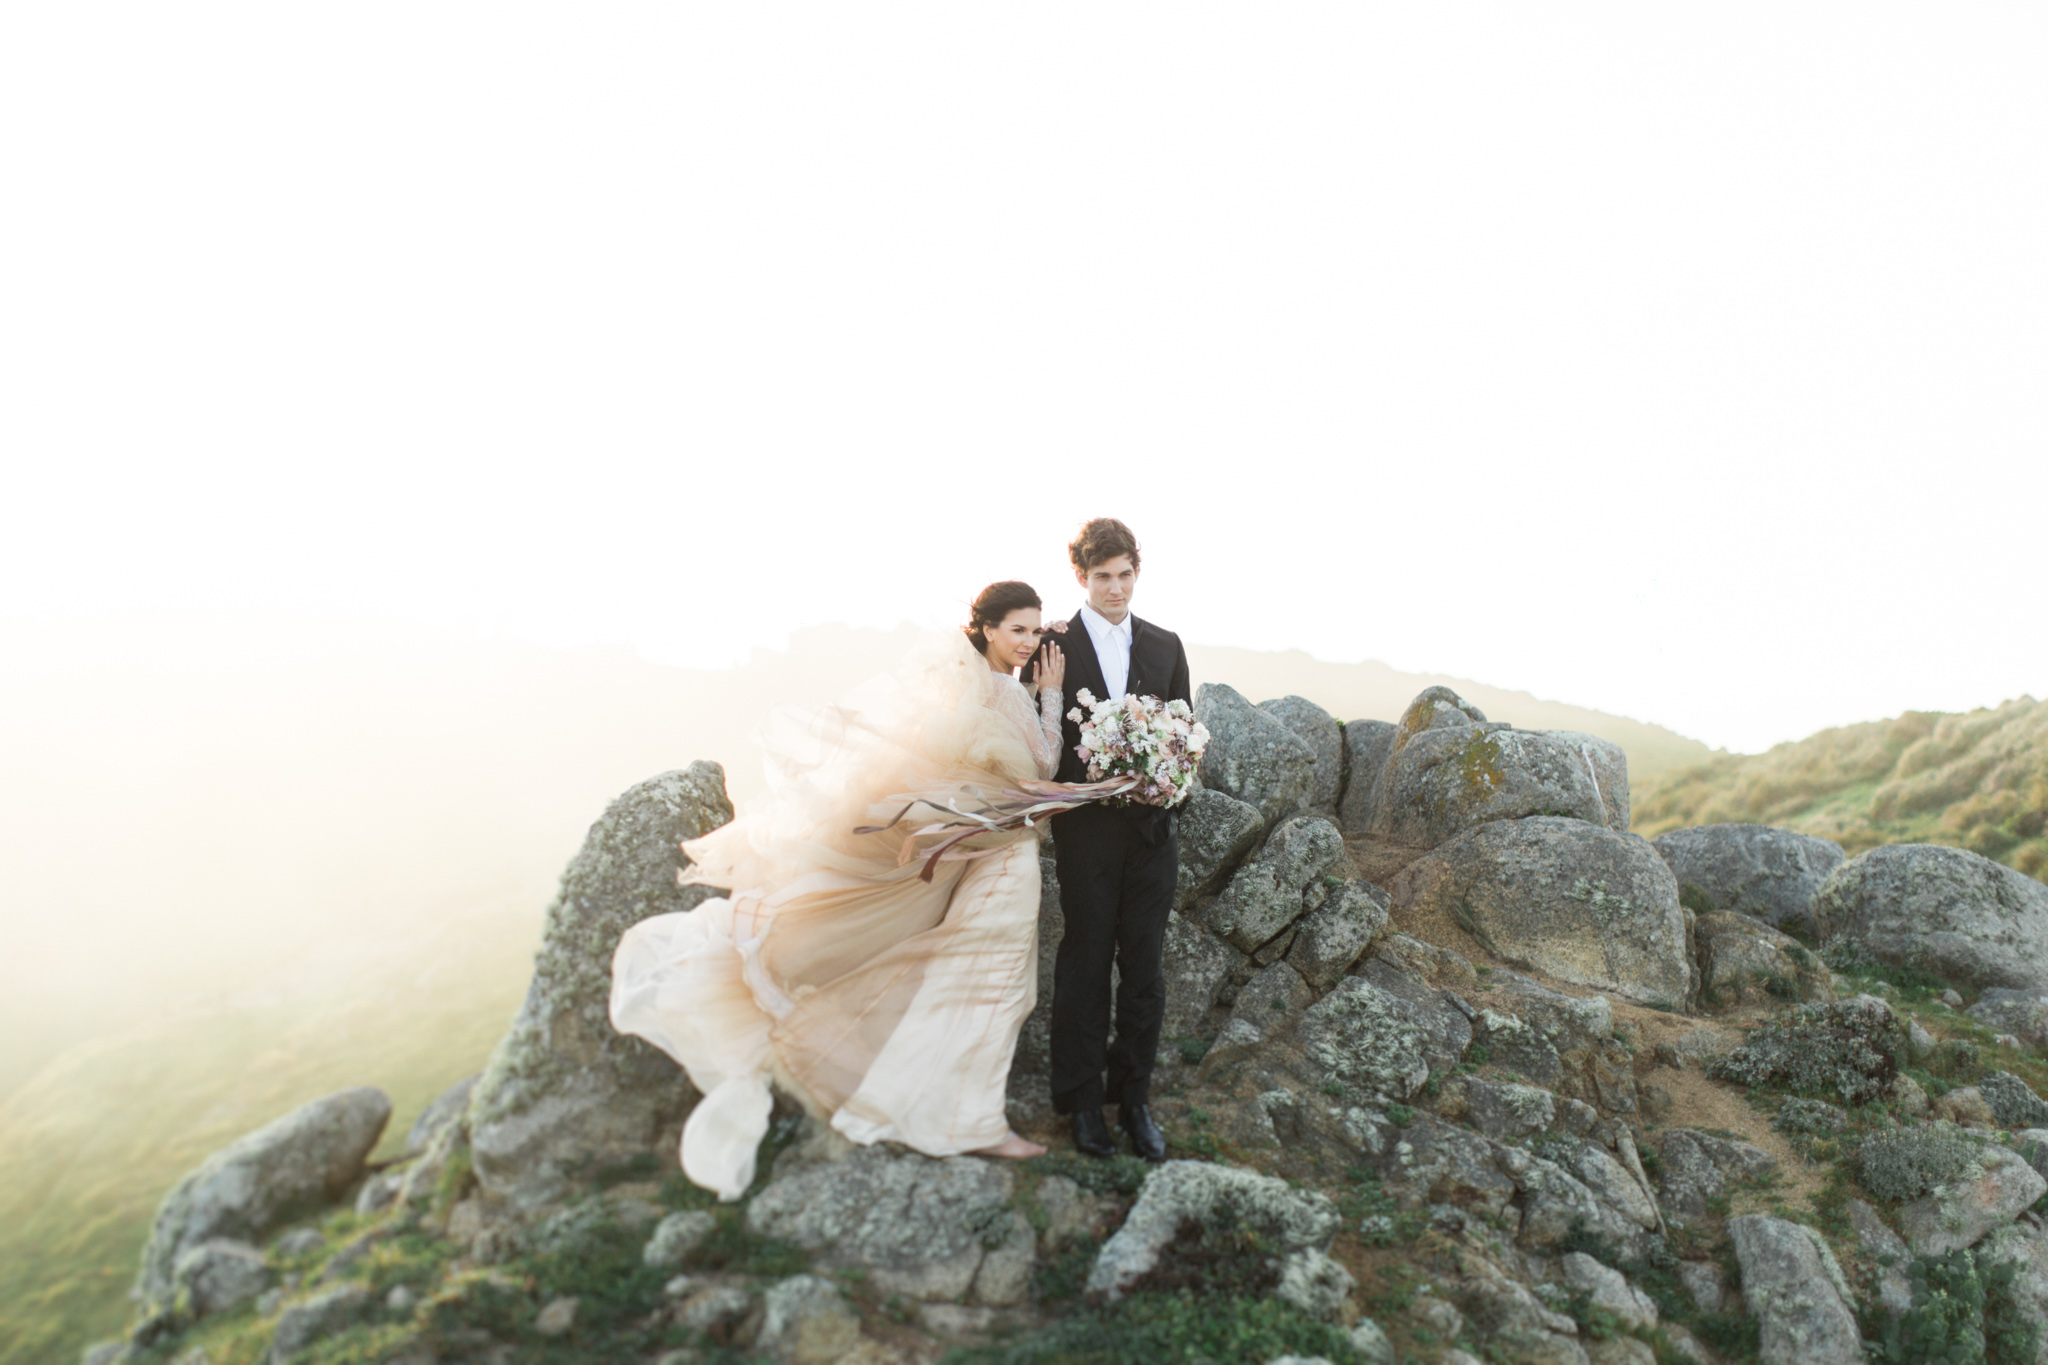 joy wed cliffside elopement - calgary wedding photographer